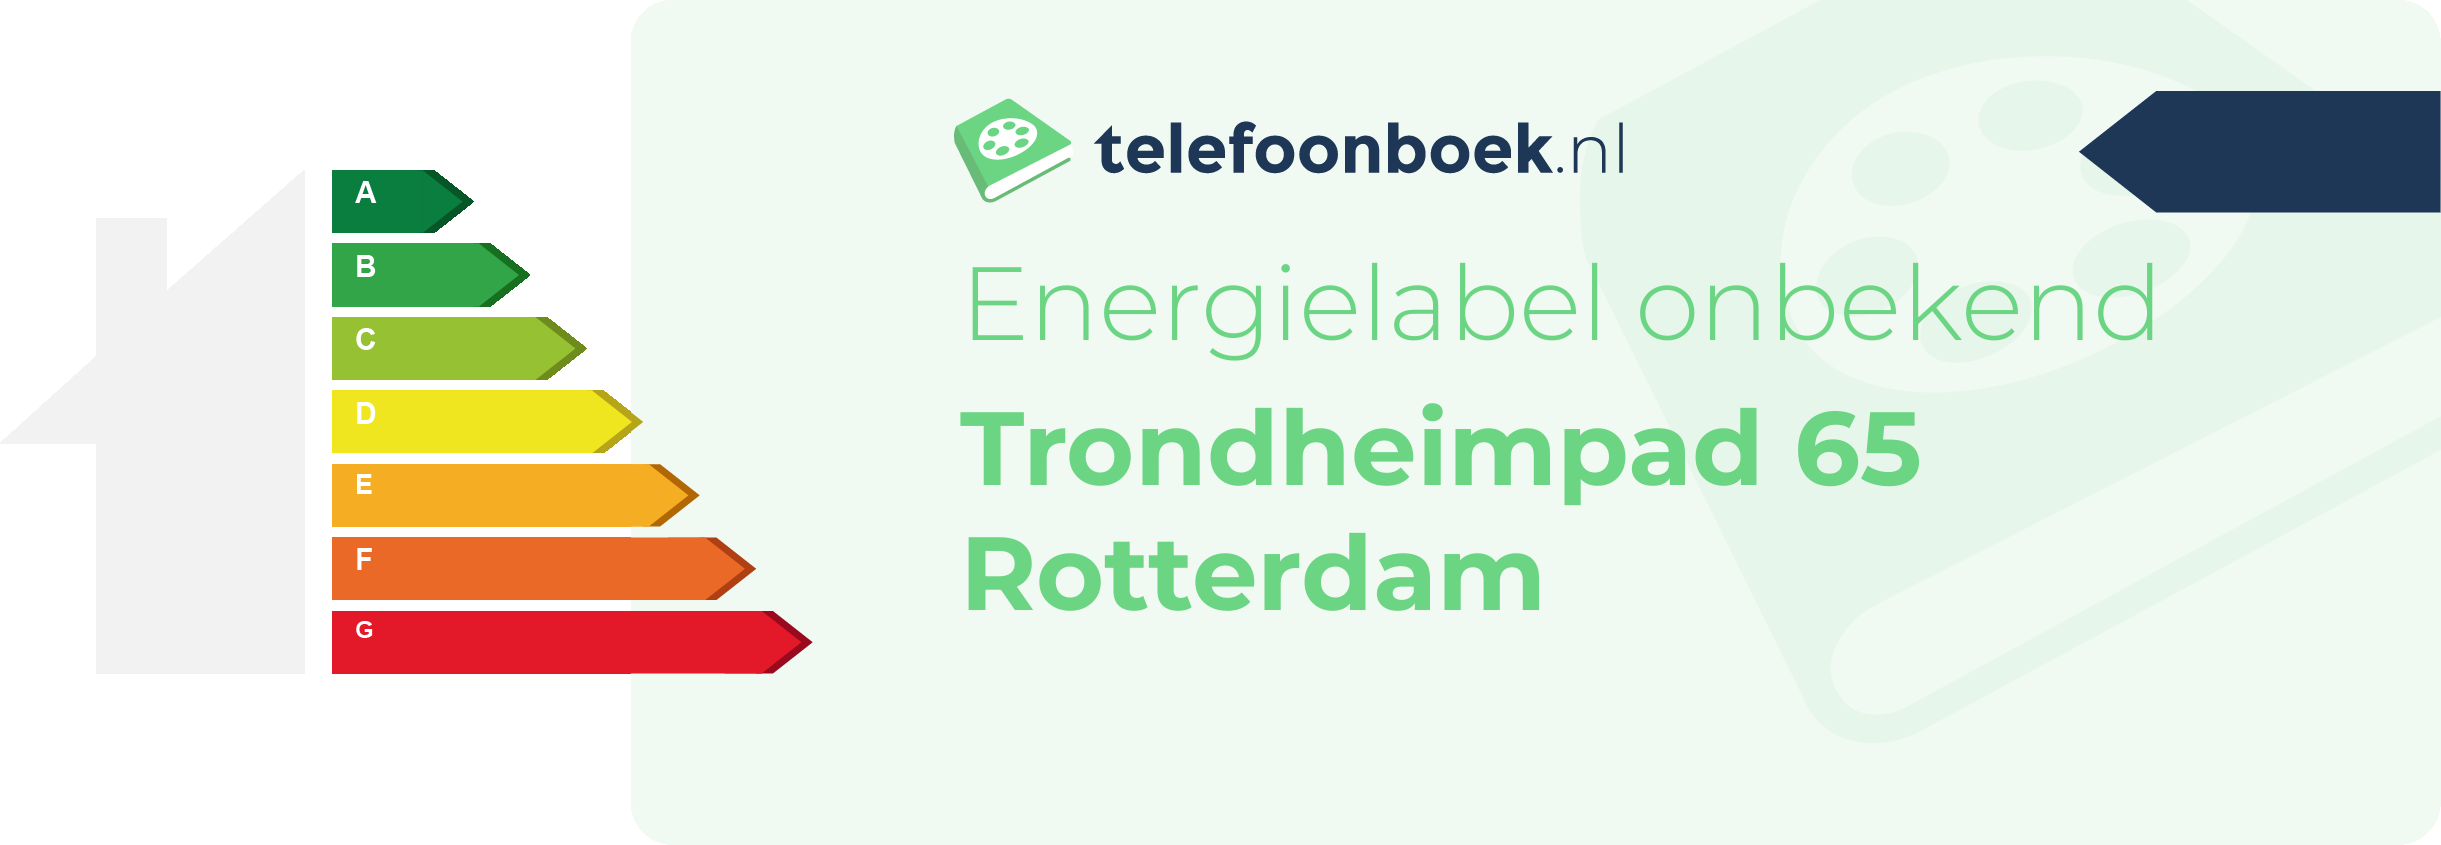 Energielabel Trondheimpad 65 Rotterdam